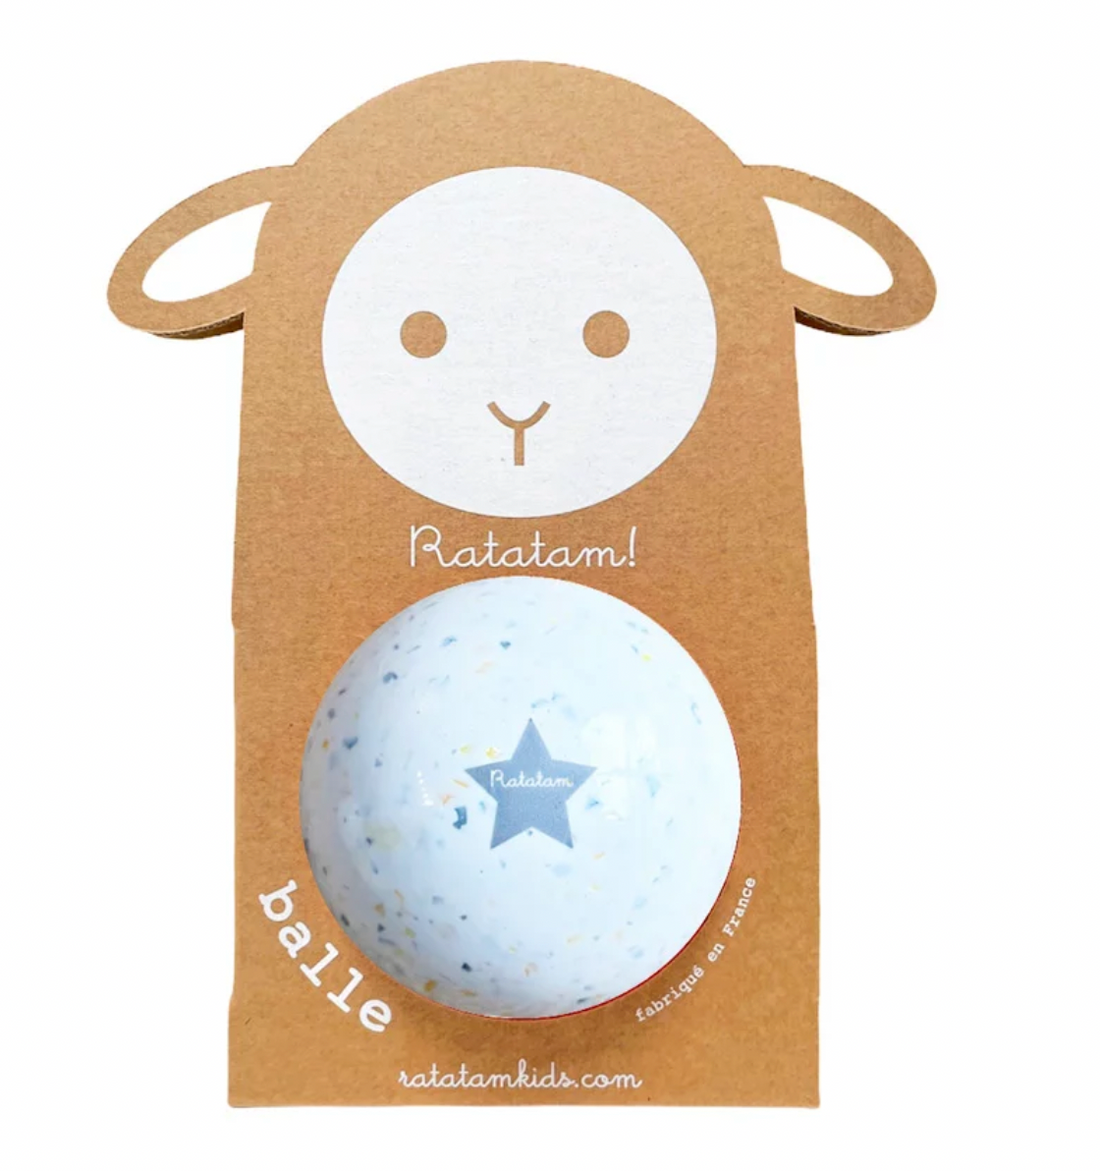 Ratatam - Kinder Confetti Ball 10cm, hergestellt in Frankreich